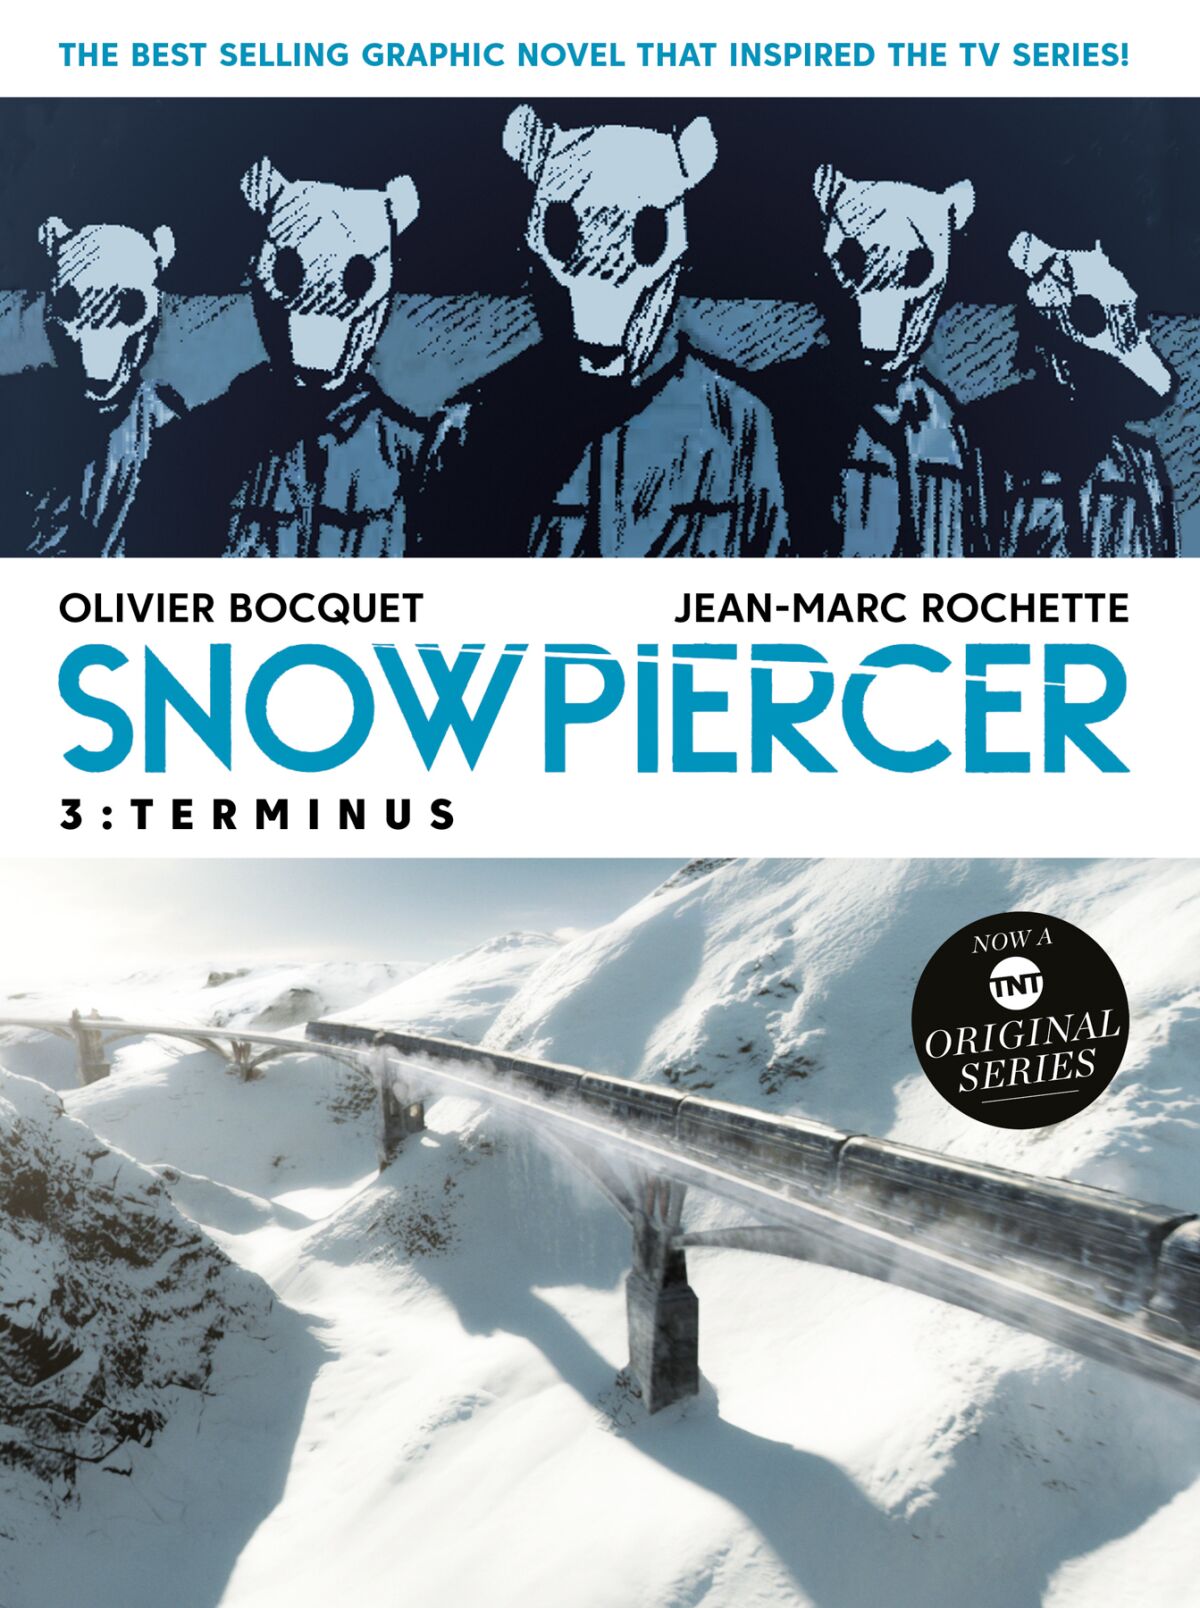 A Snowpiercer graphic novel